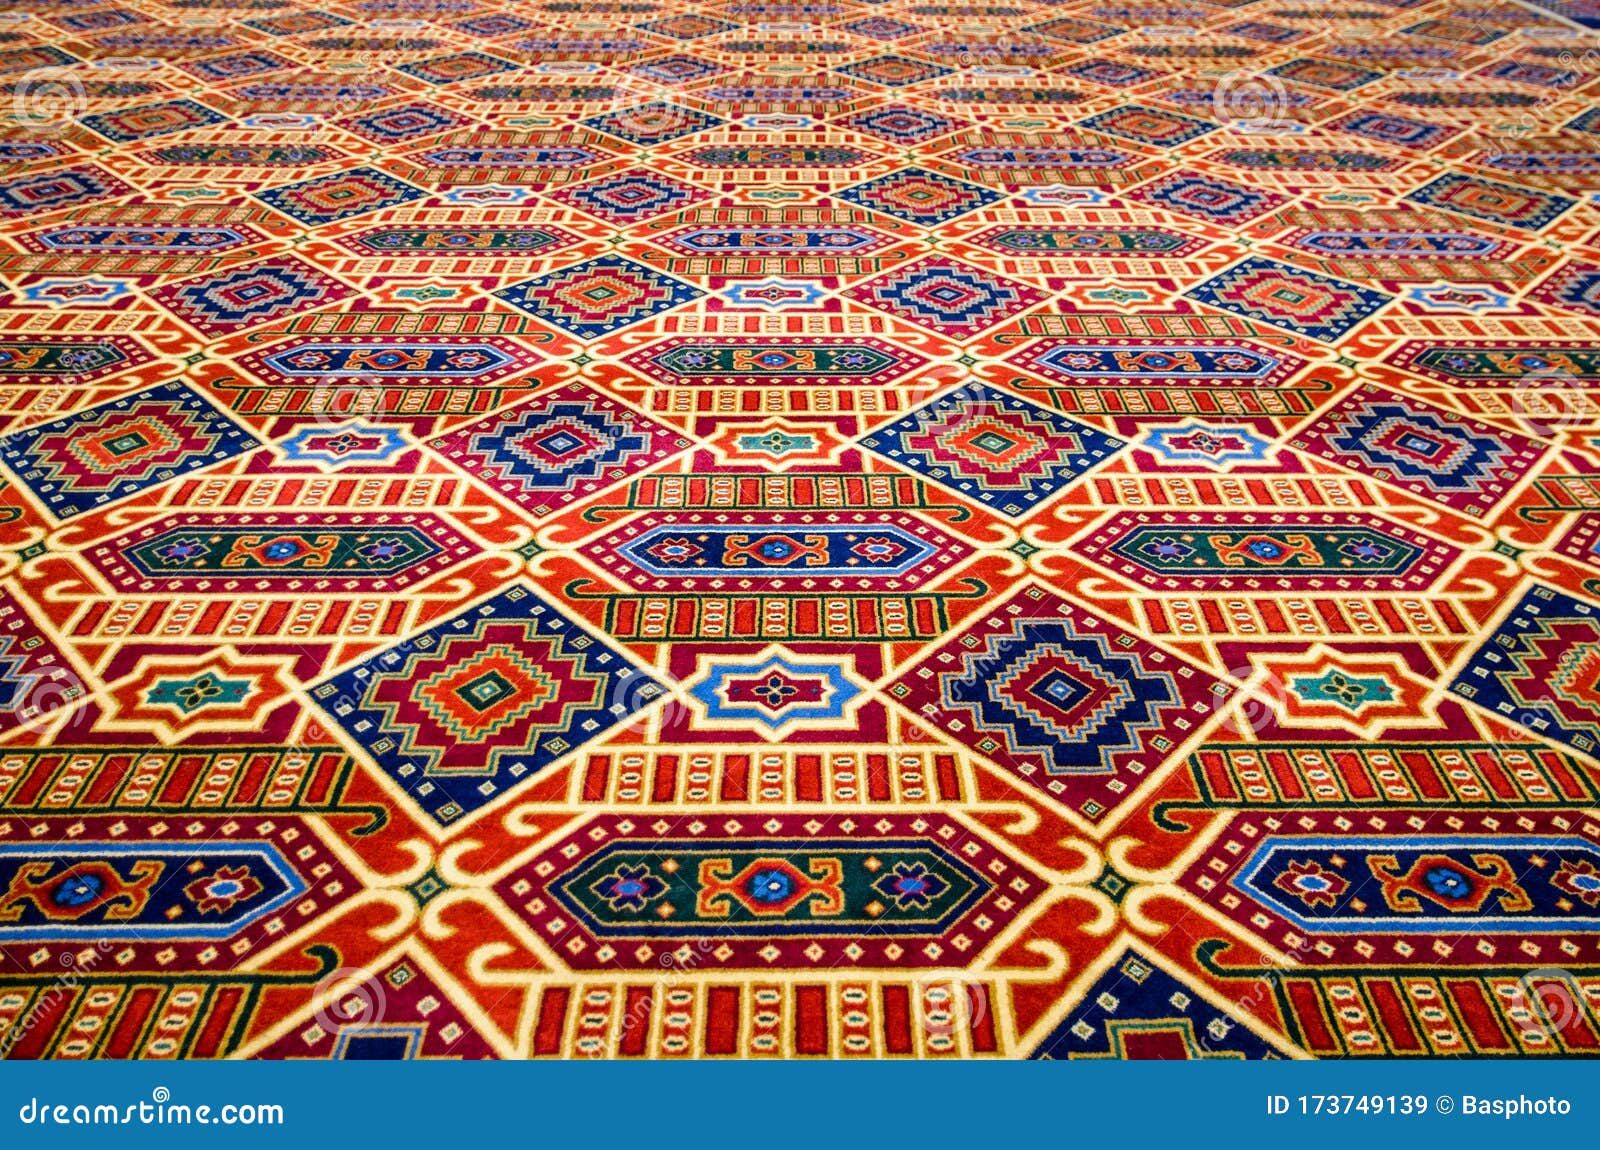 colourful carpet, diminishing perspective